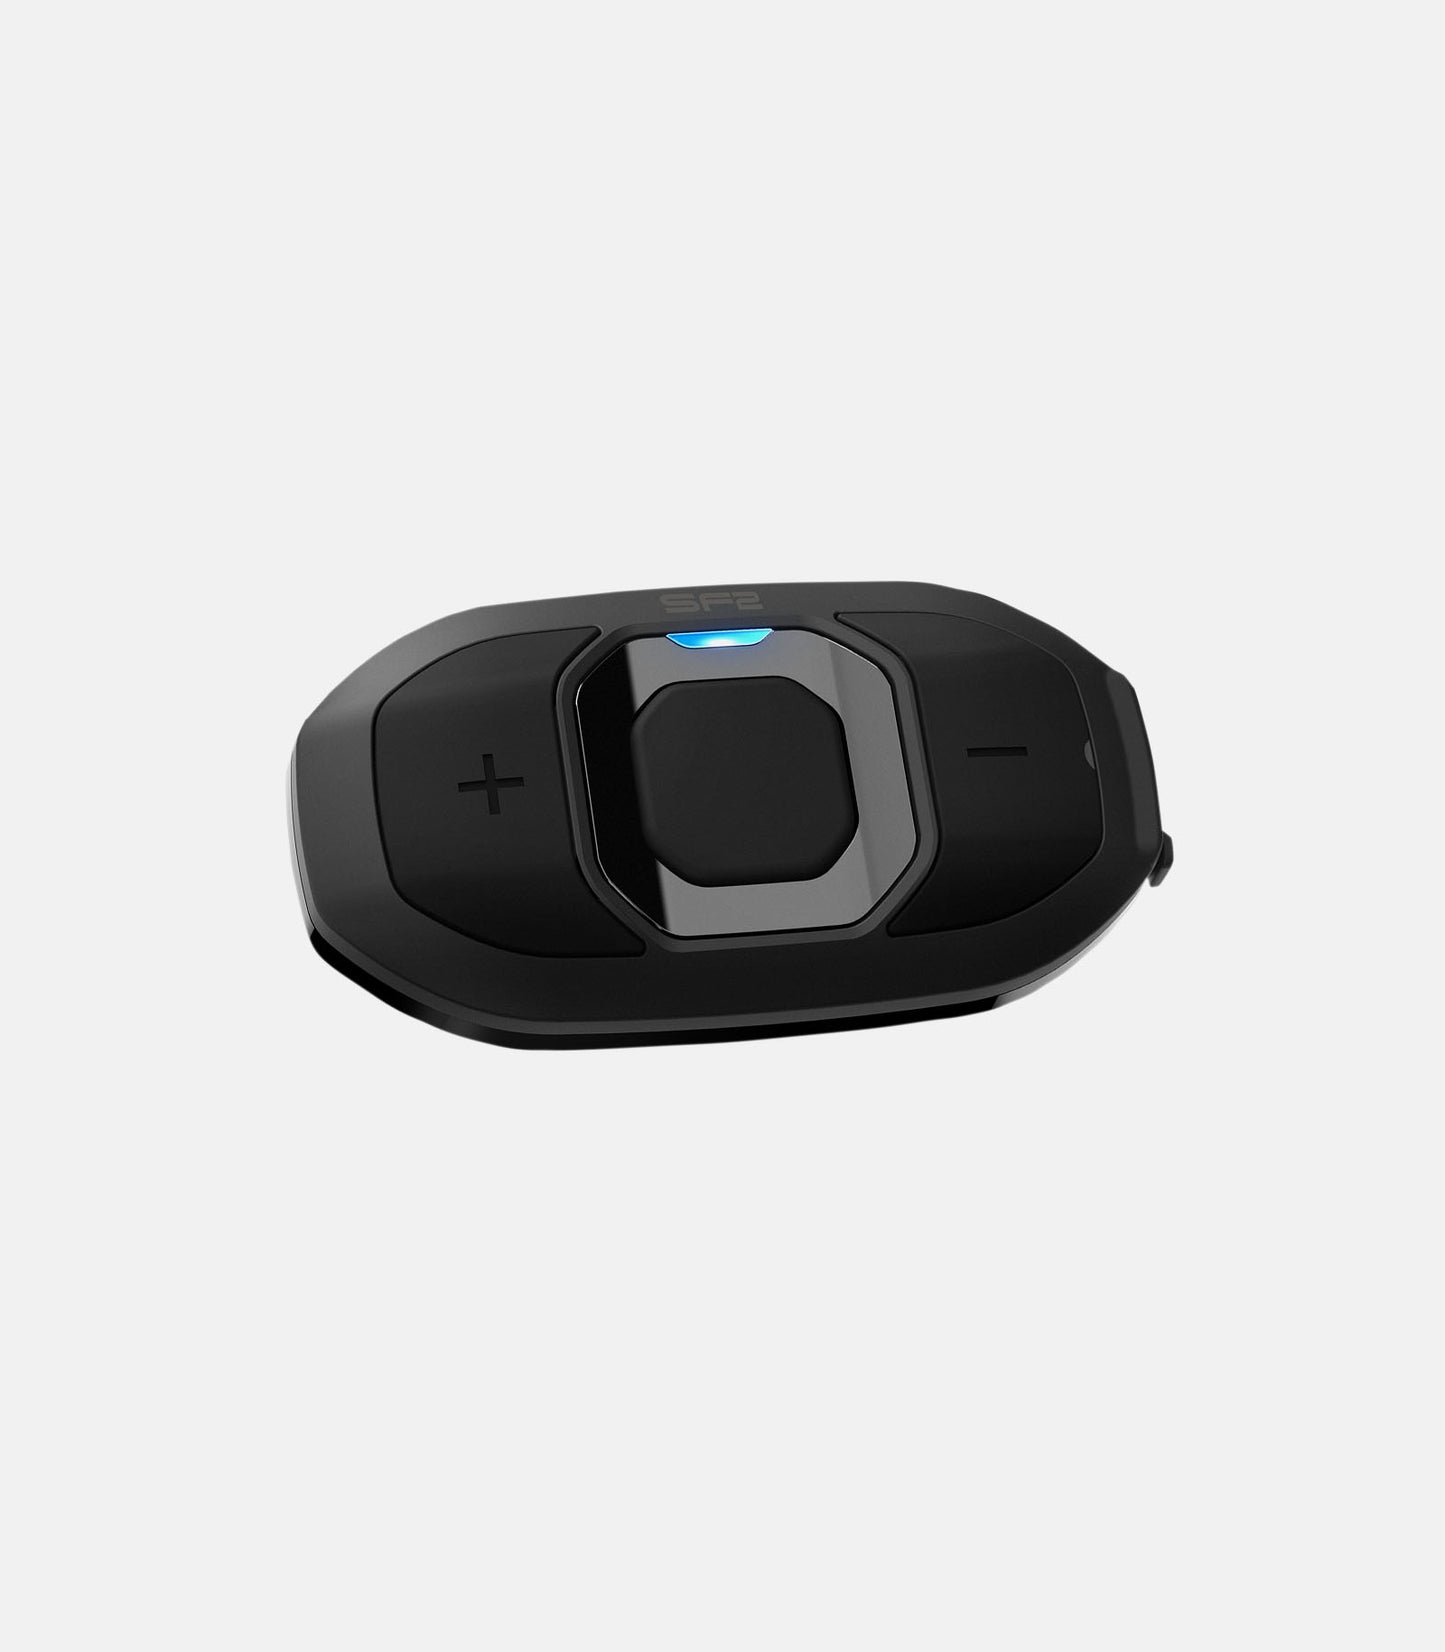 SENA SF2 Bluetooth Headset - 2-Way - Dual Speakers